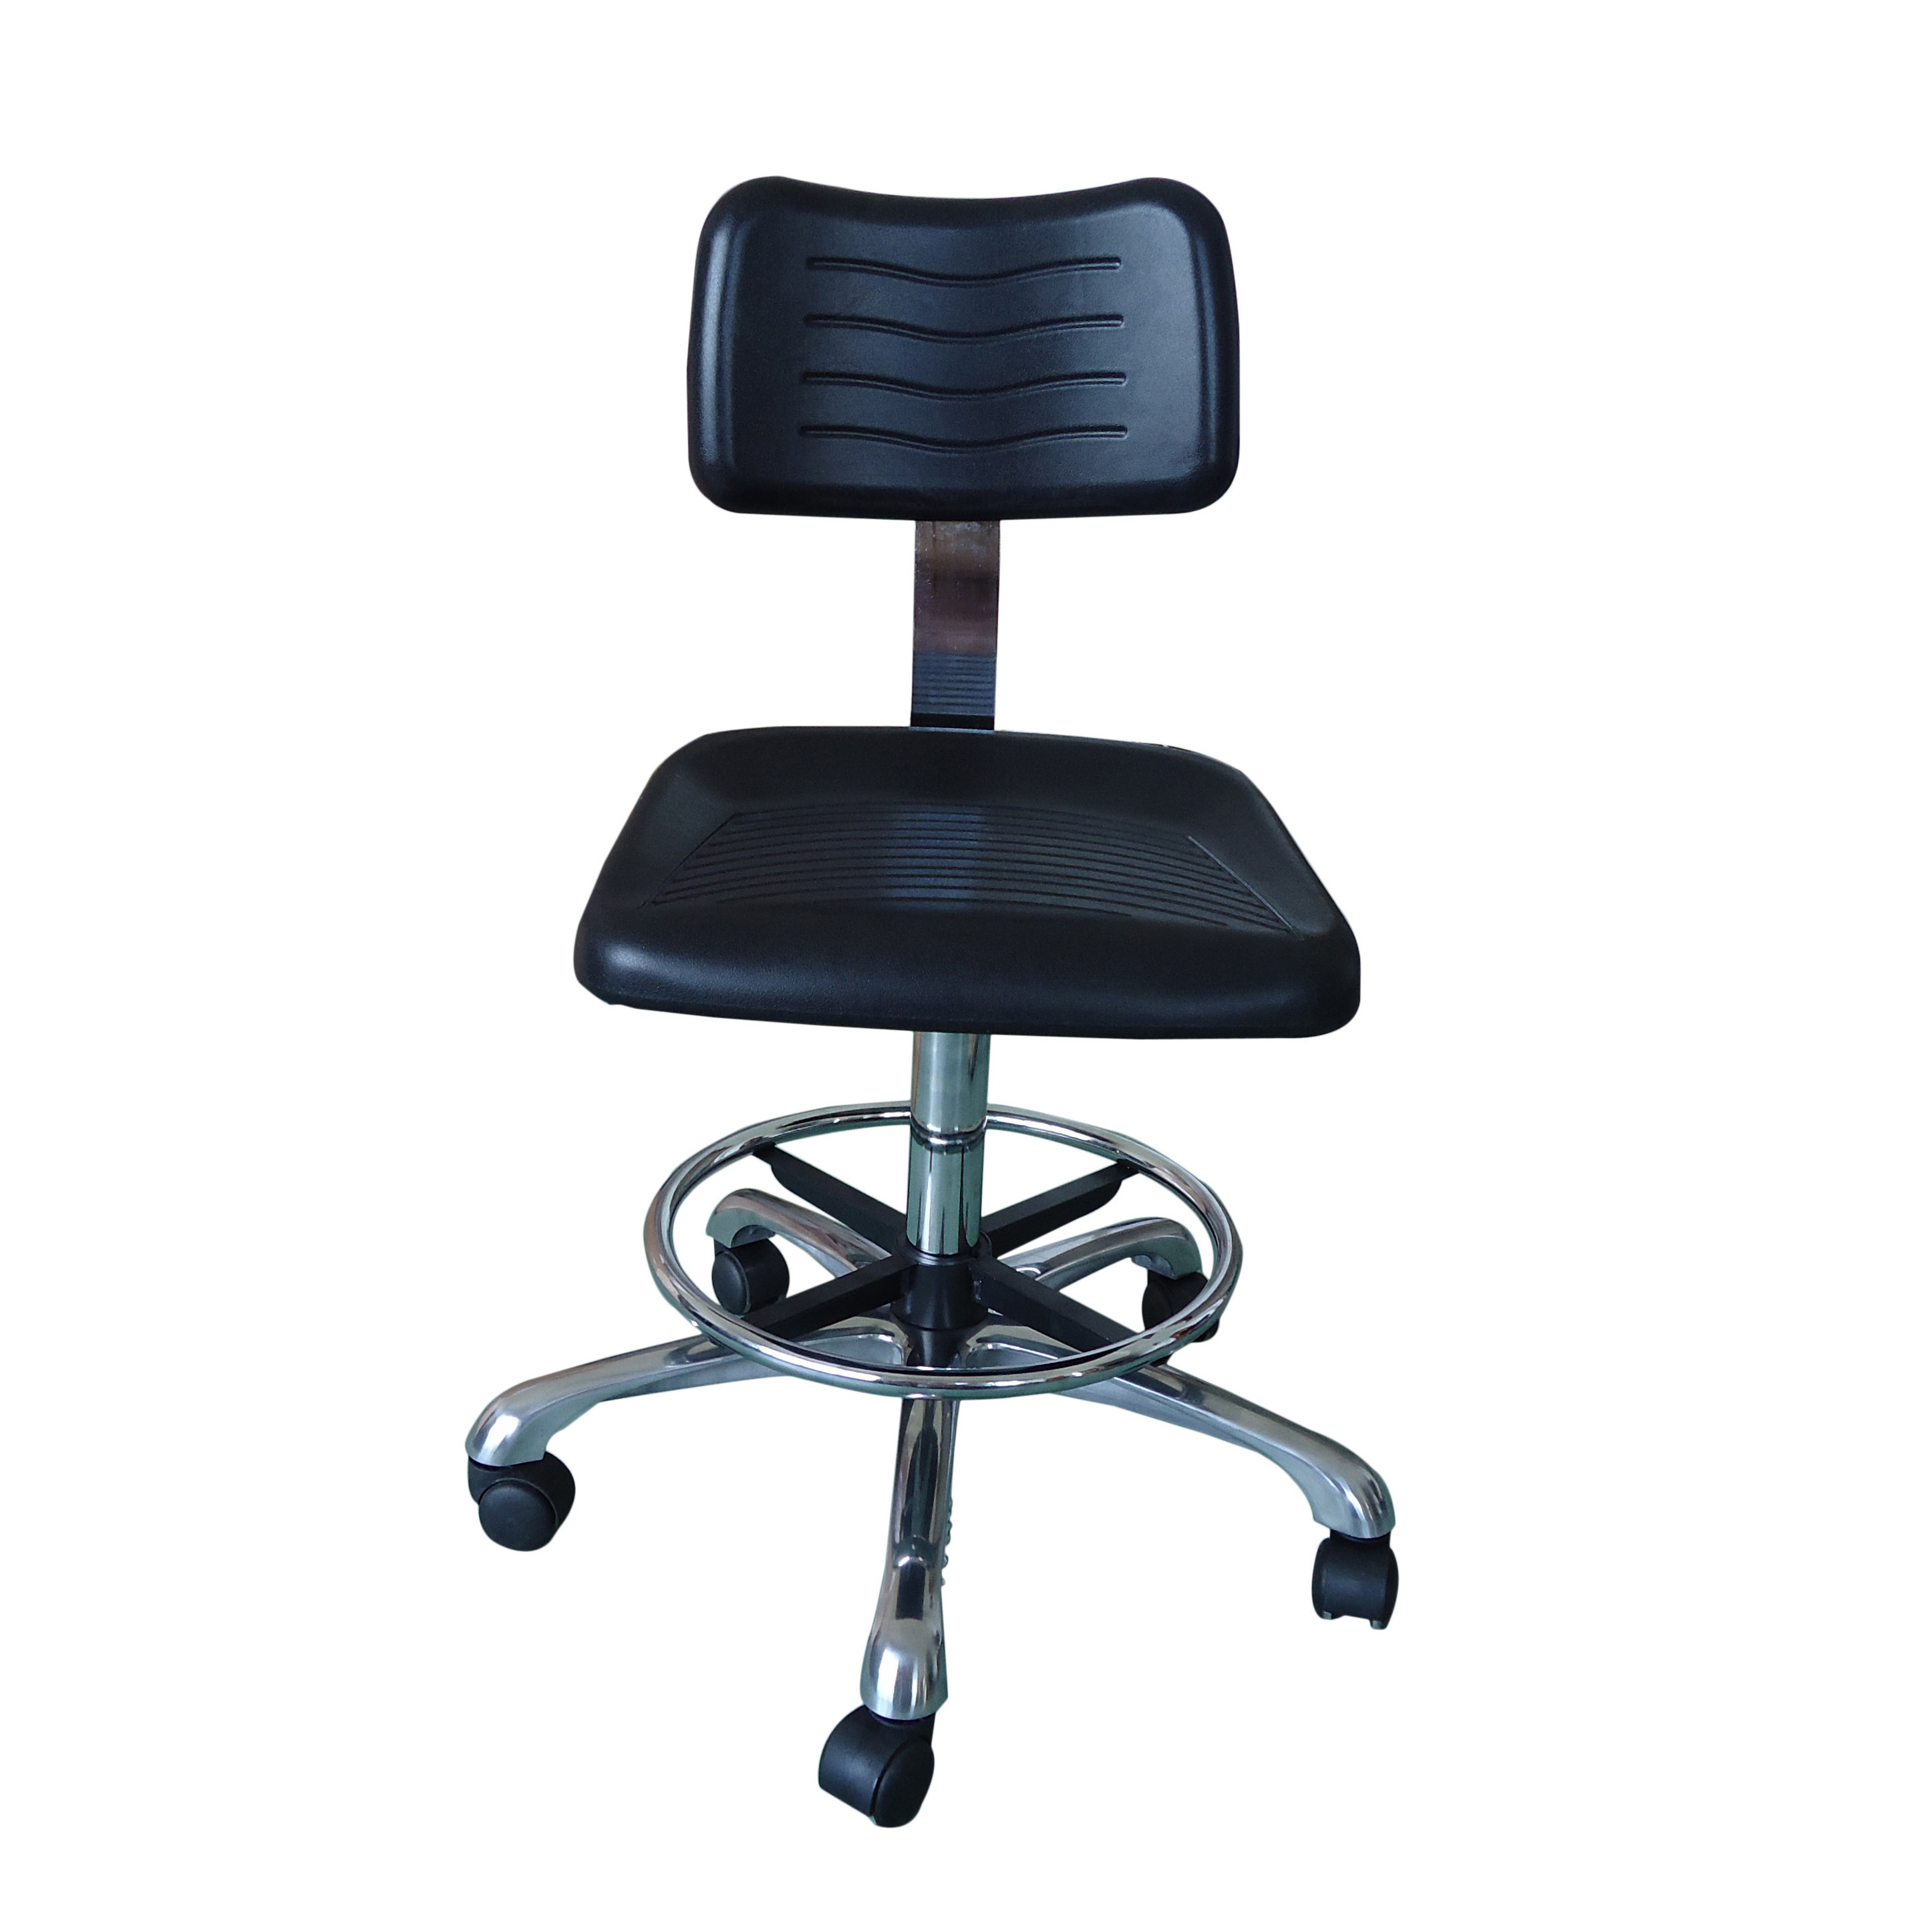 Aluminium Alloy Five Star Feet 440x410mm Seat ESD Safe Chairs